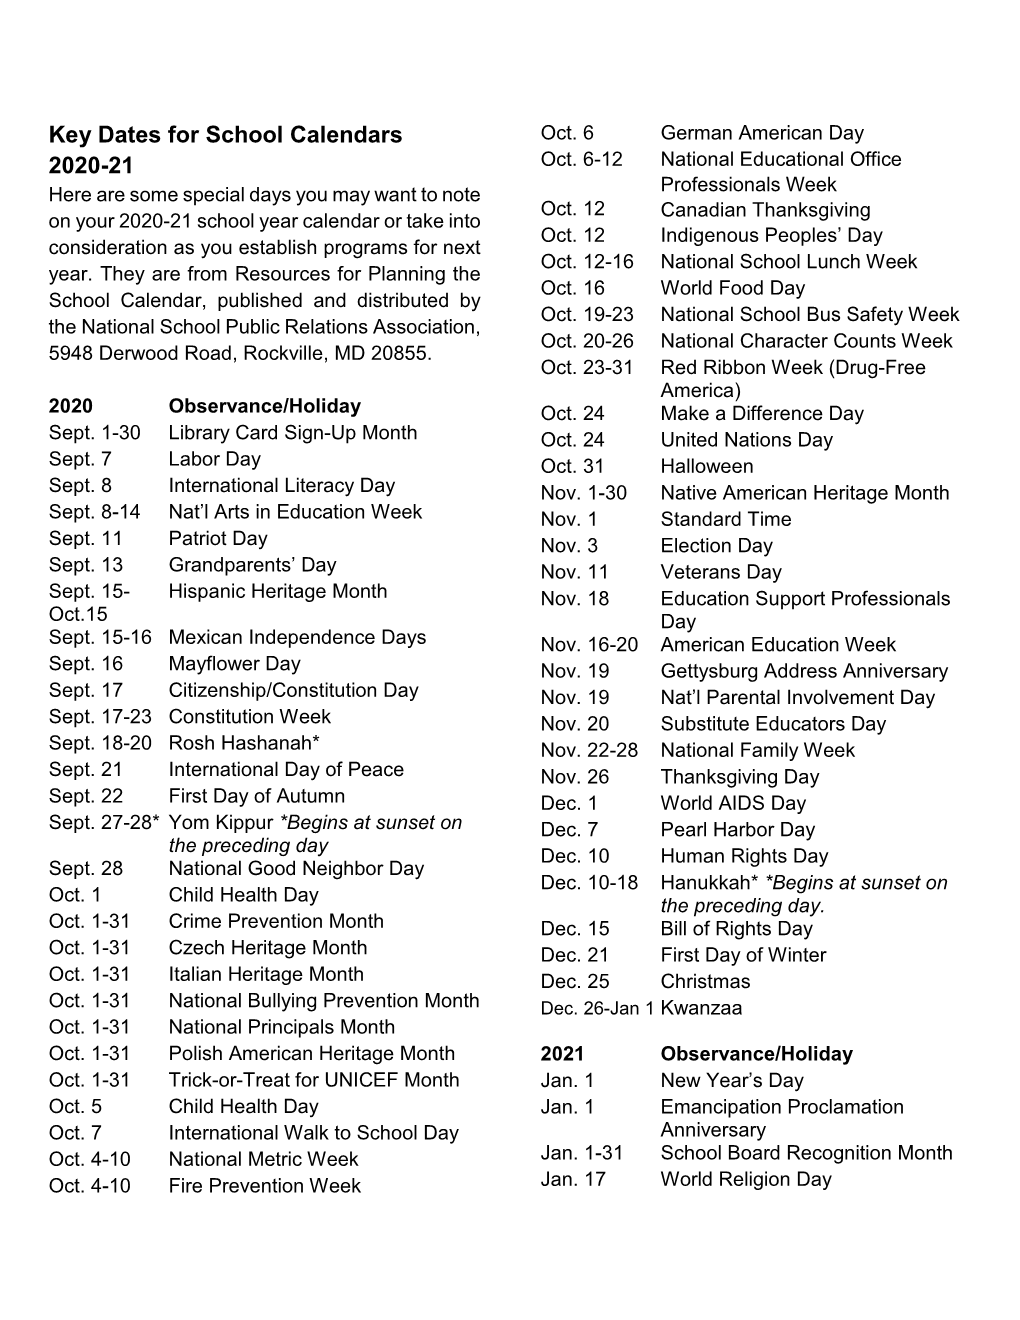 Key Dates for School Calendars 2020-21